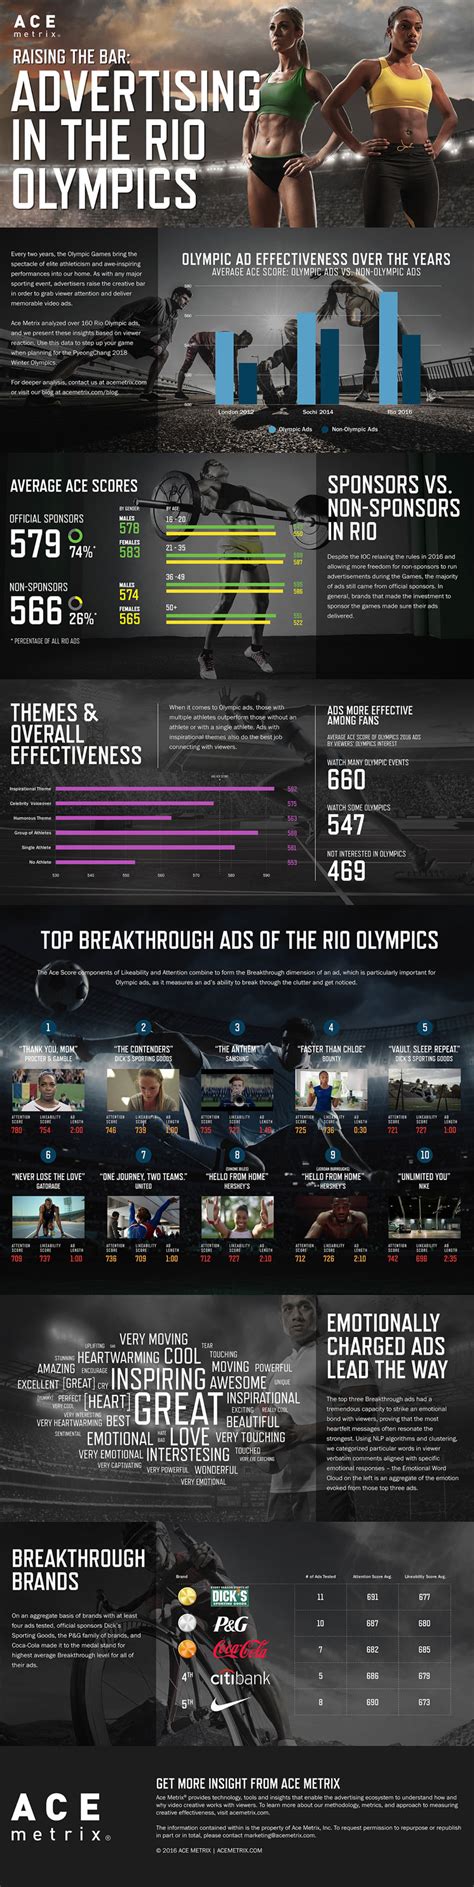 Ace Metrix Rio Olympics Infographic Ace Metrix